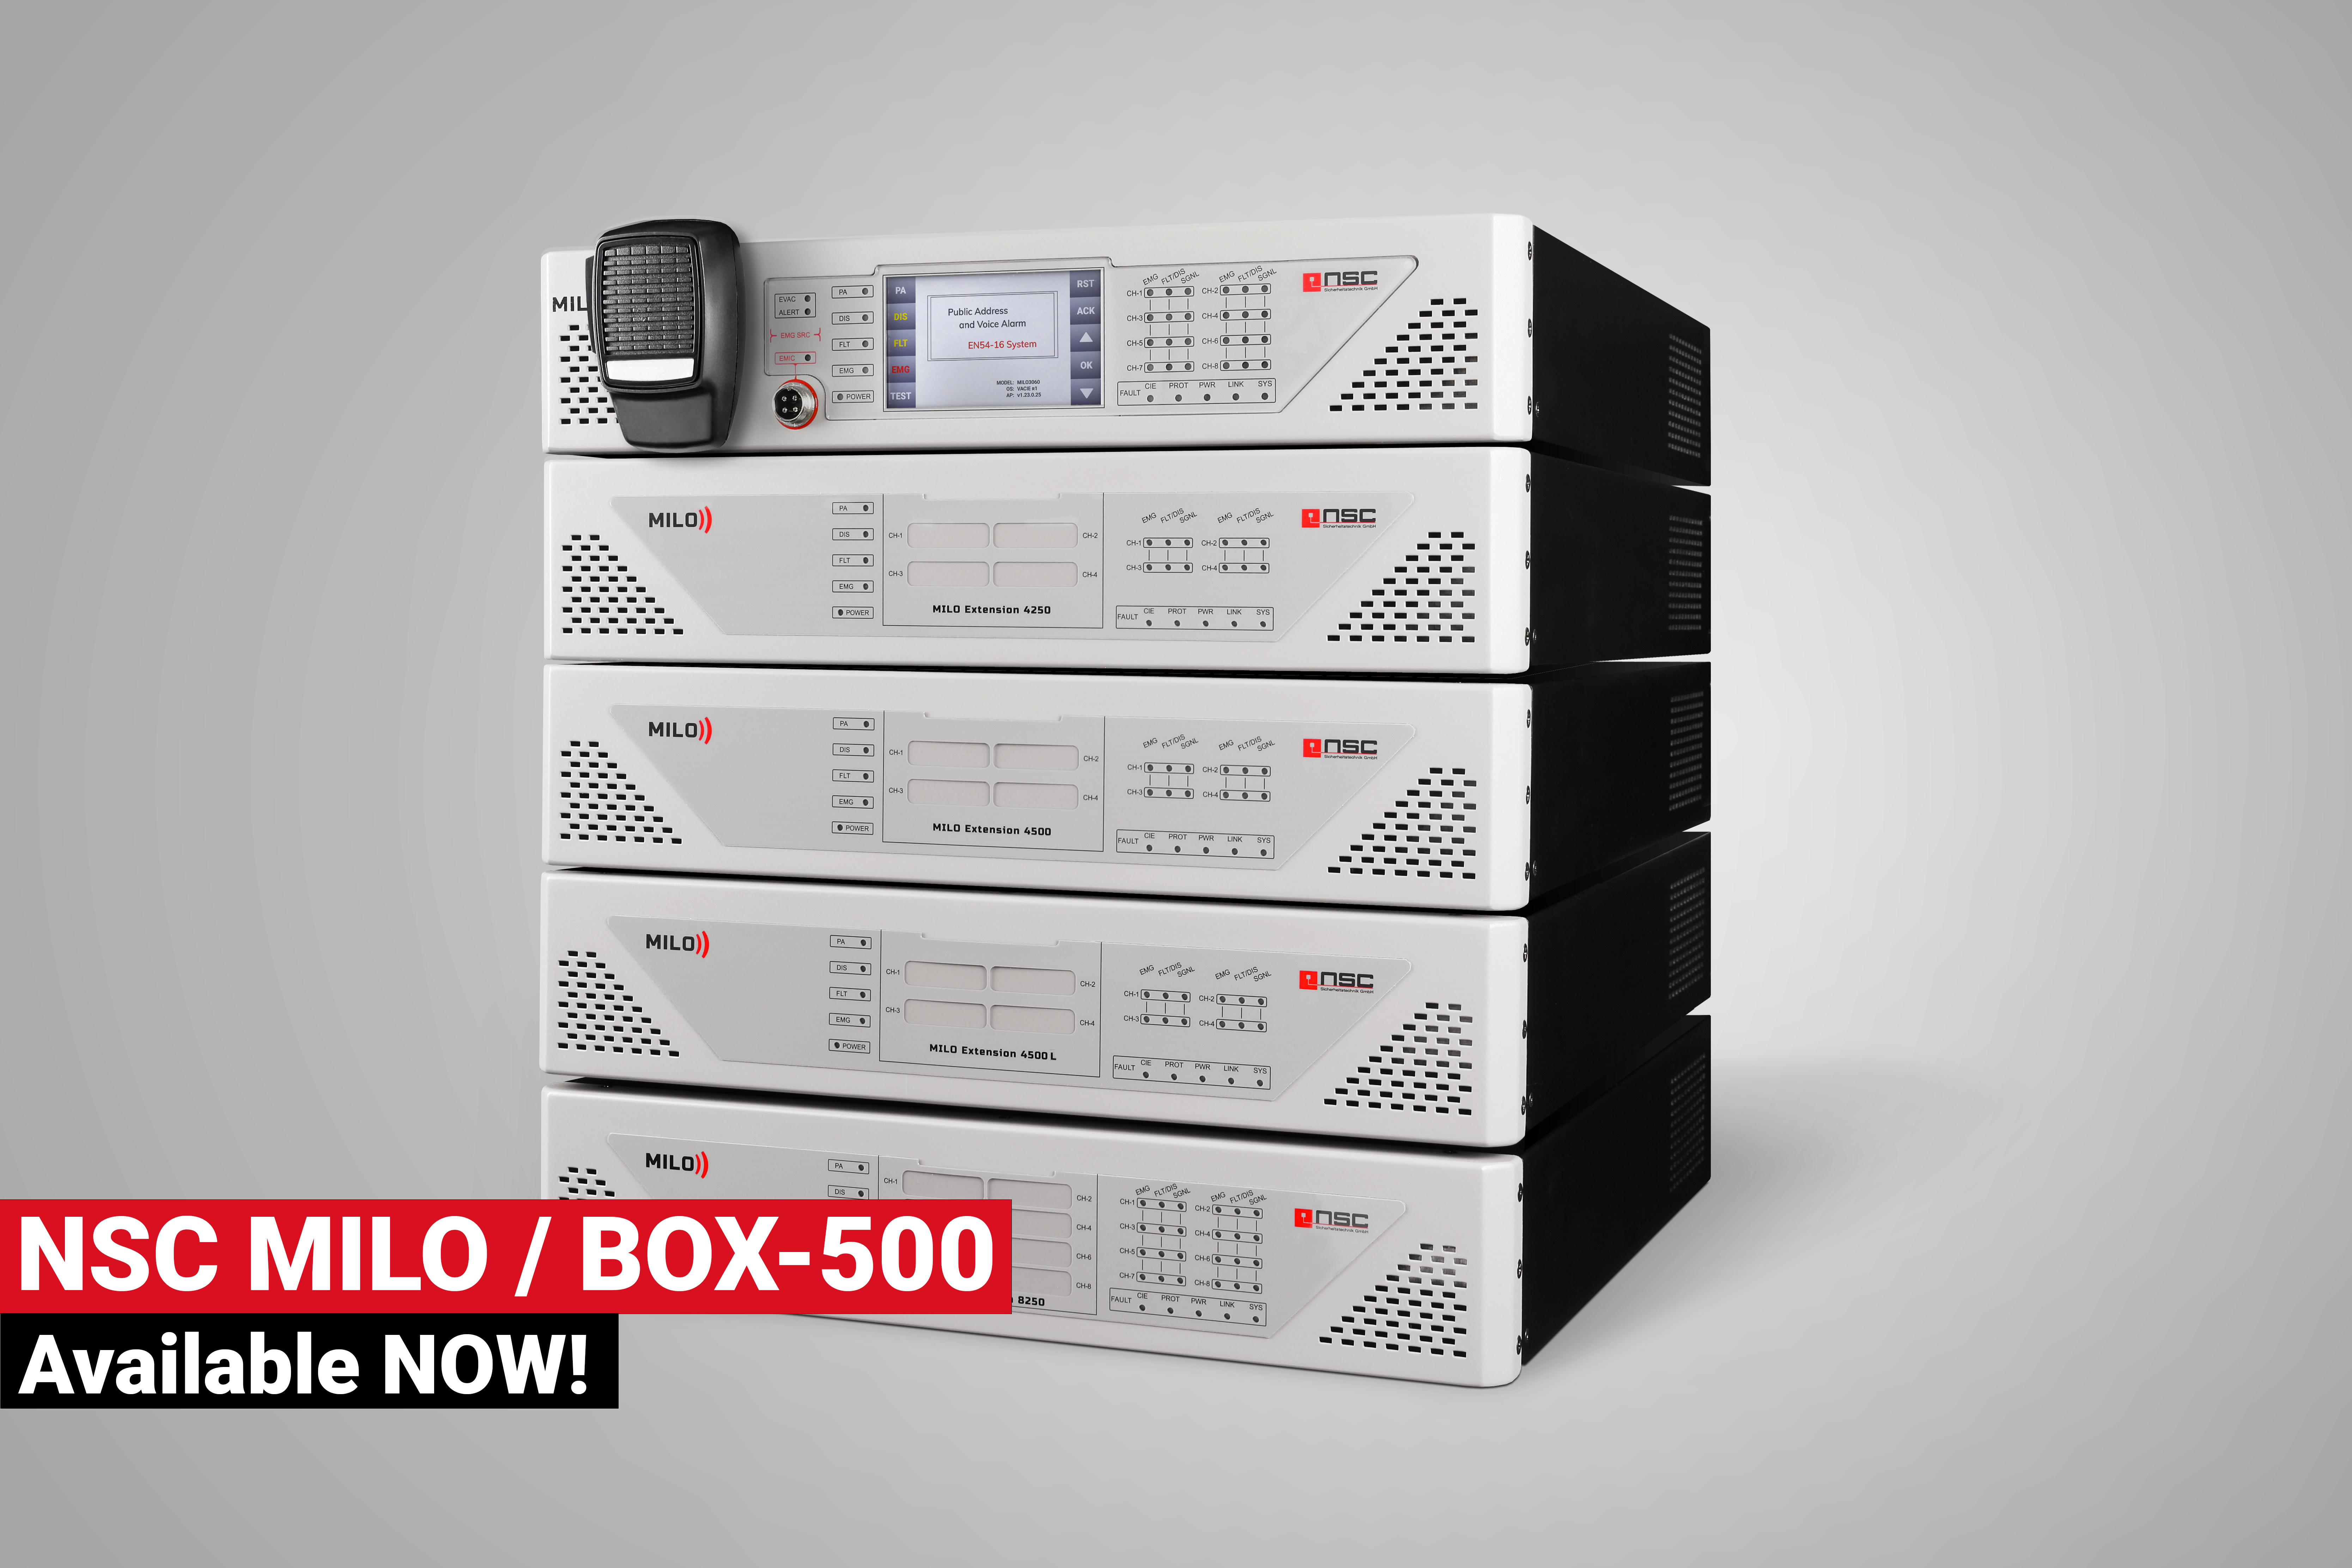 NSC MILO / BOX-500 – Available NOW